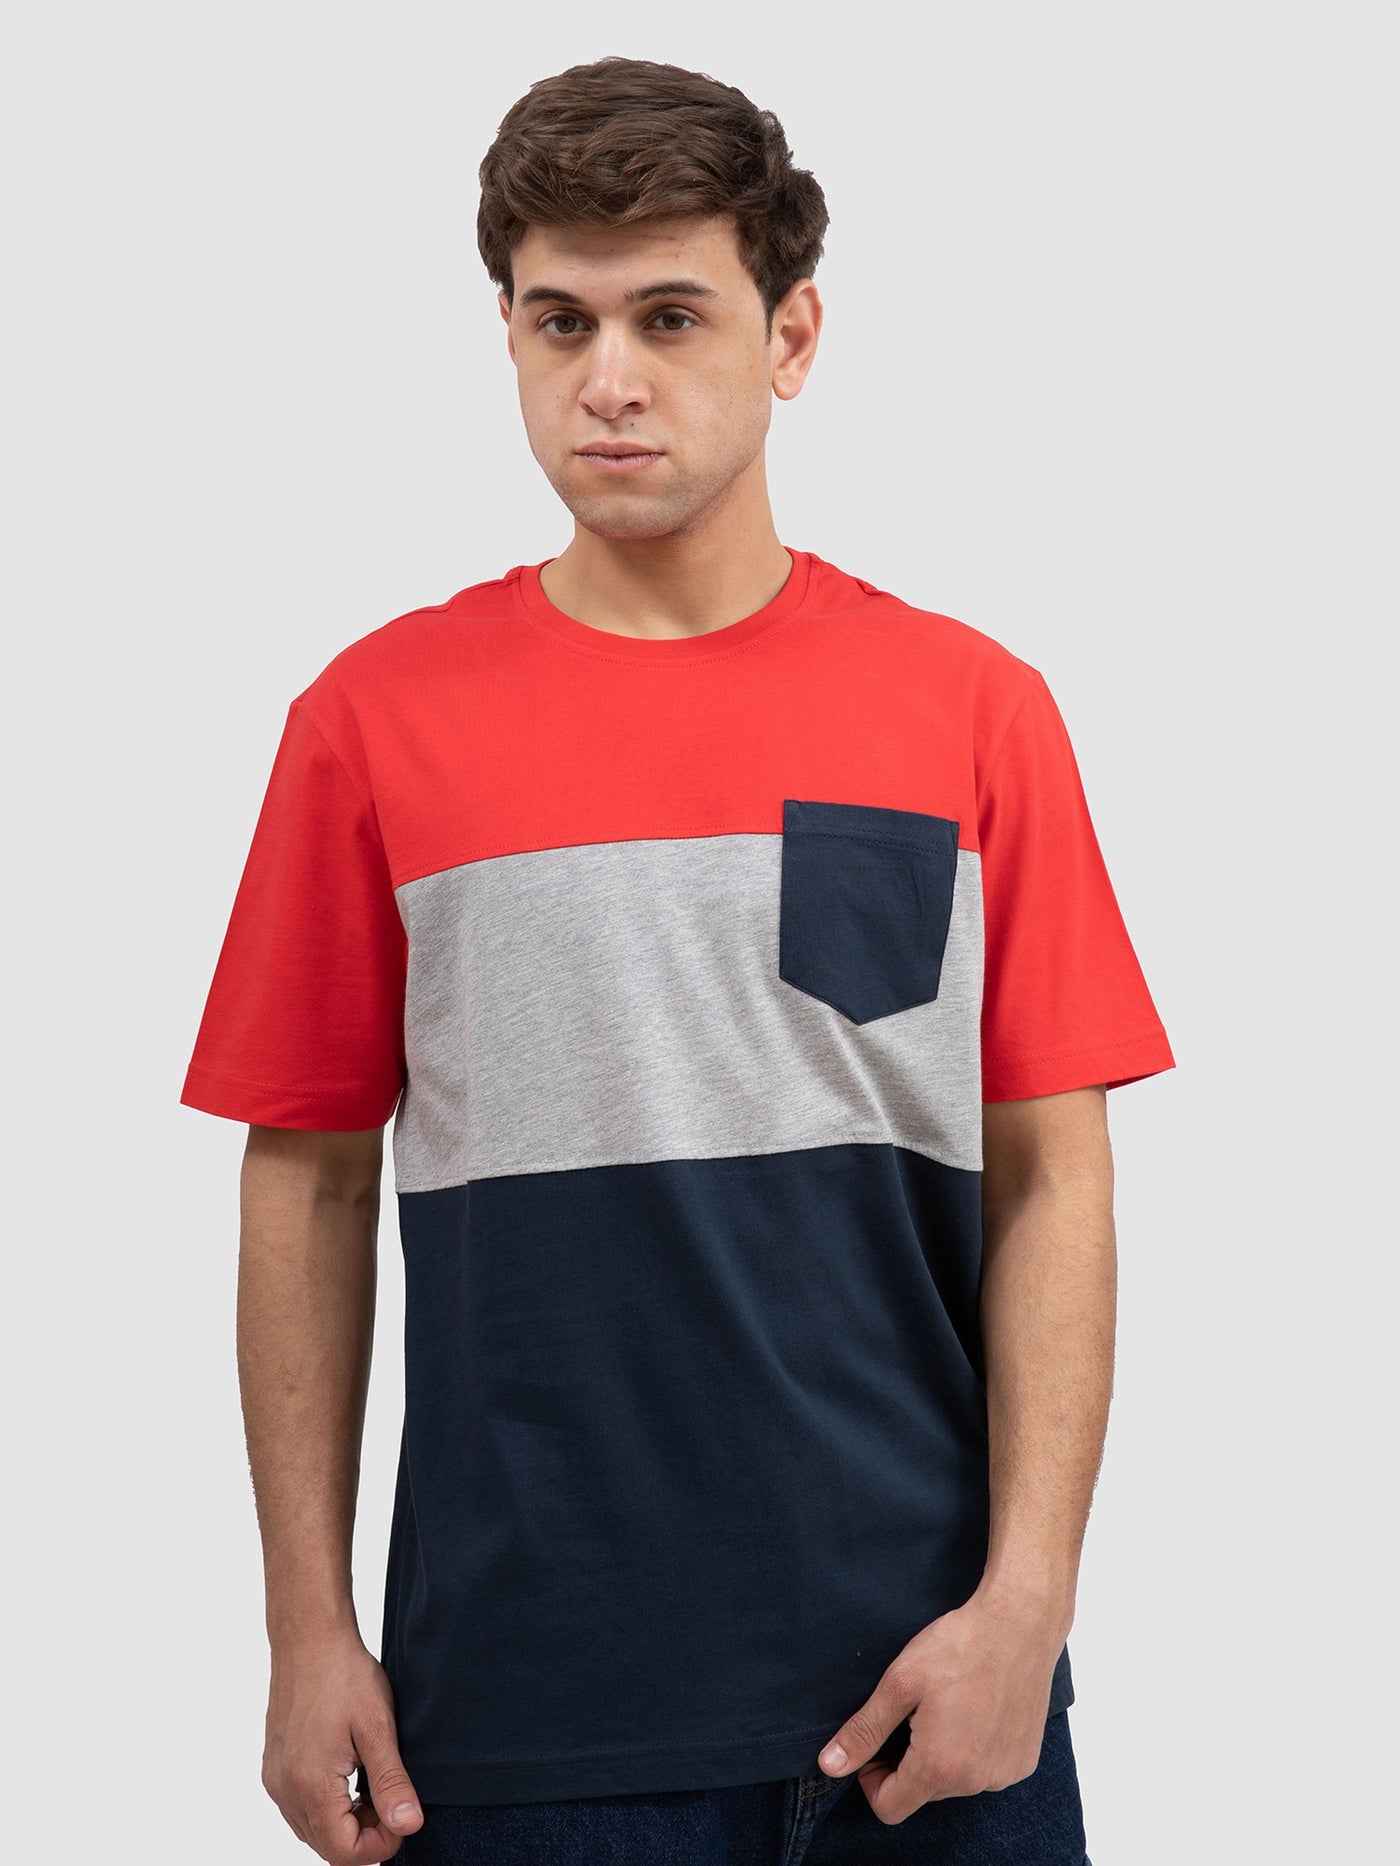 Premoda Mens Color-Block t T-Shirt